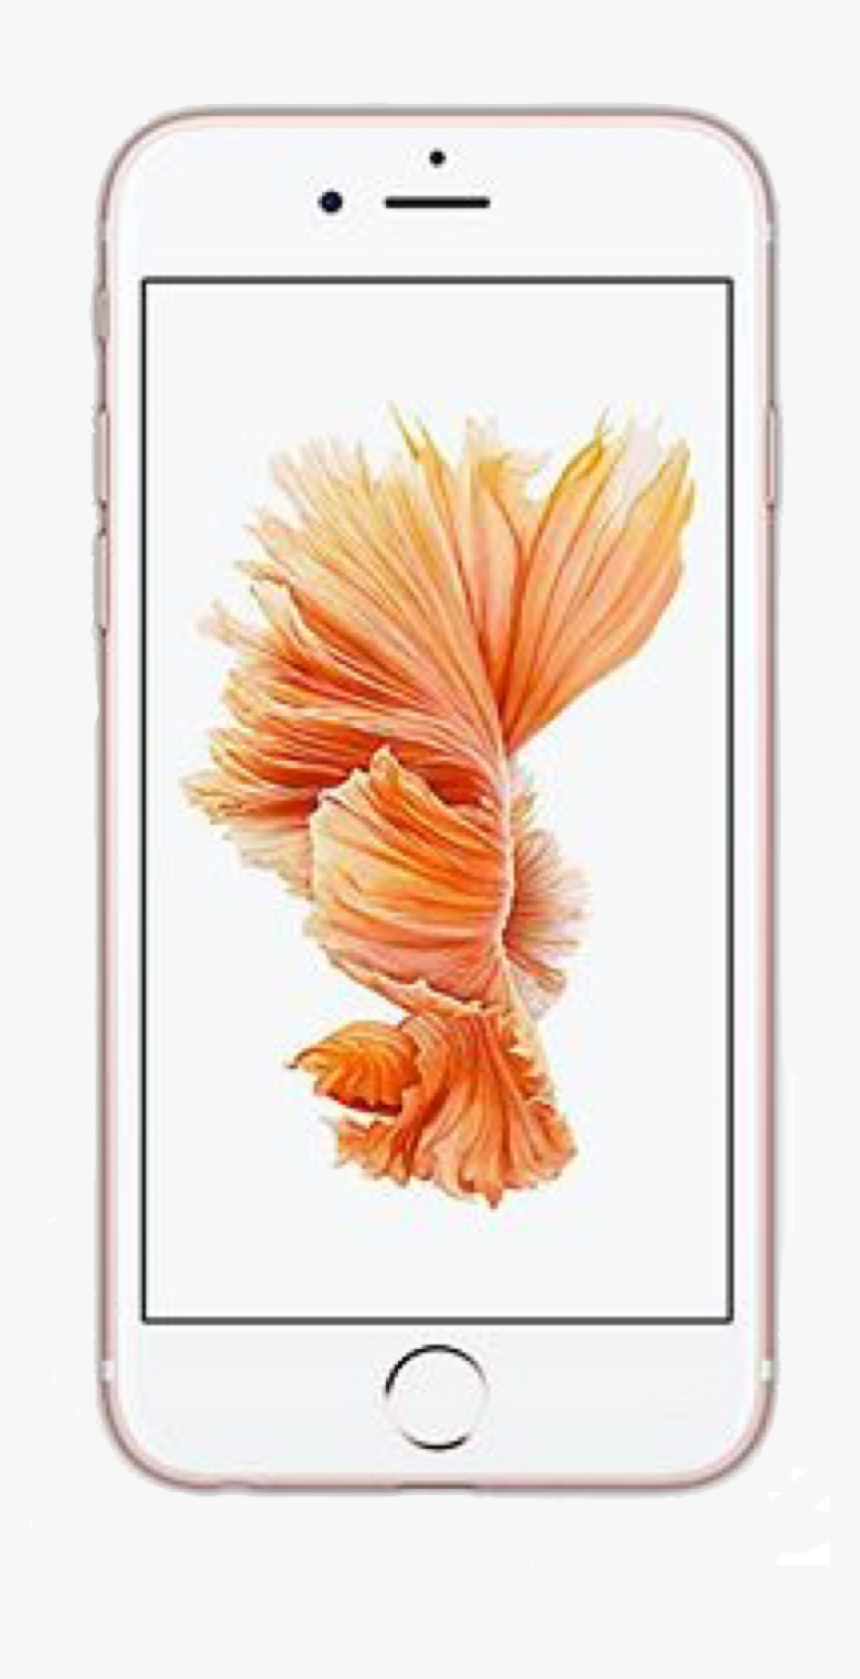 #iphone #iphone6 #iphone7 #apple #phone #trendy #basic - Rose Gold Iphone 6 Plus